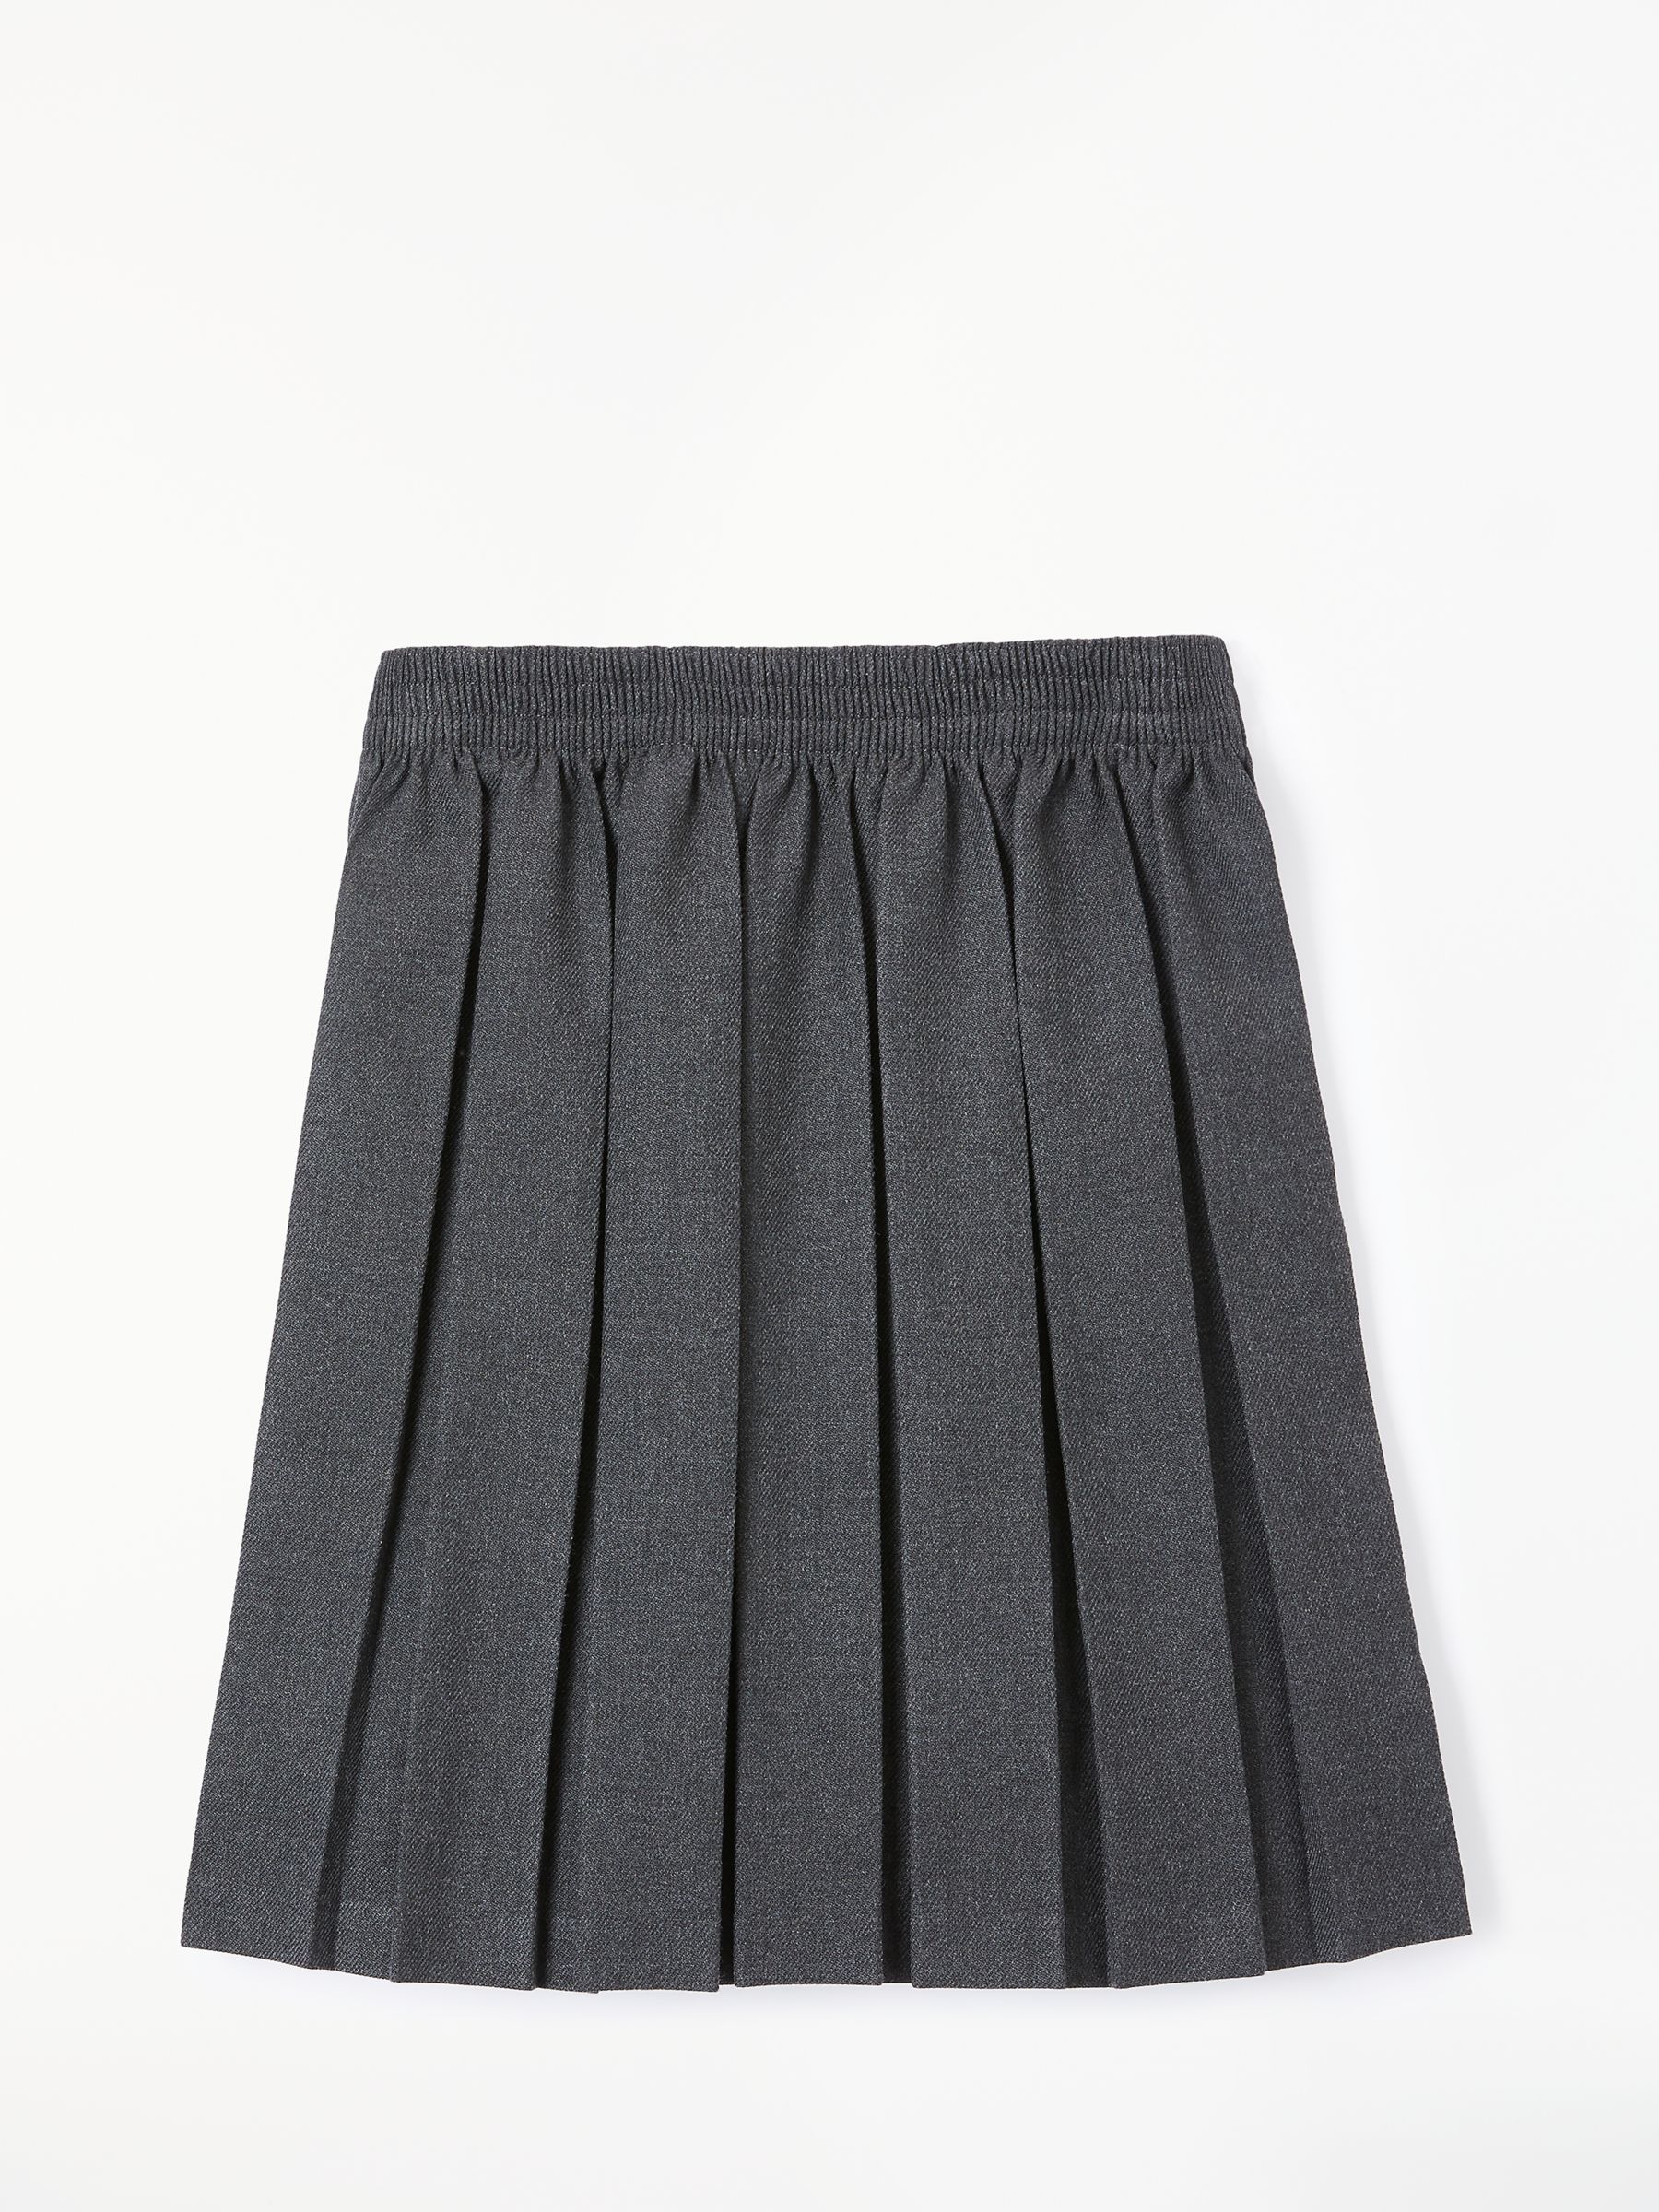 Buy John Lewis Girls' Stain Resistant Pleated School Skirt, Grey Online at johnlewis.com